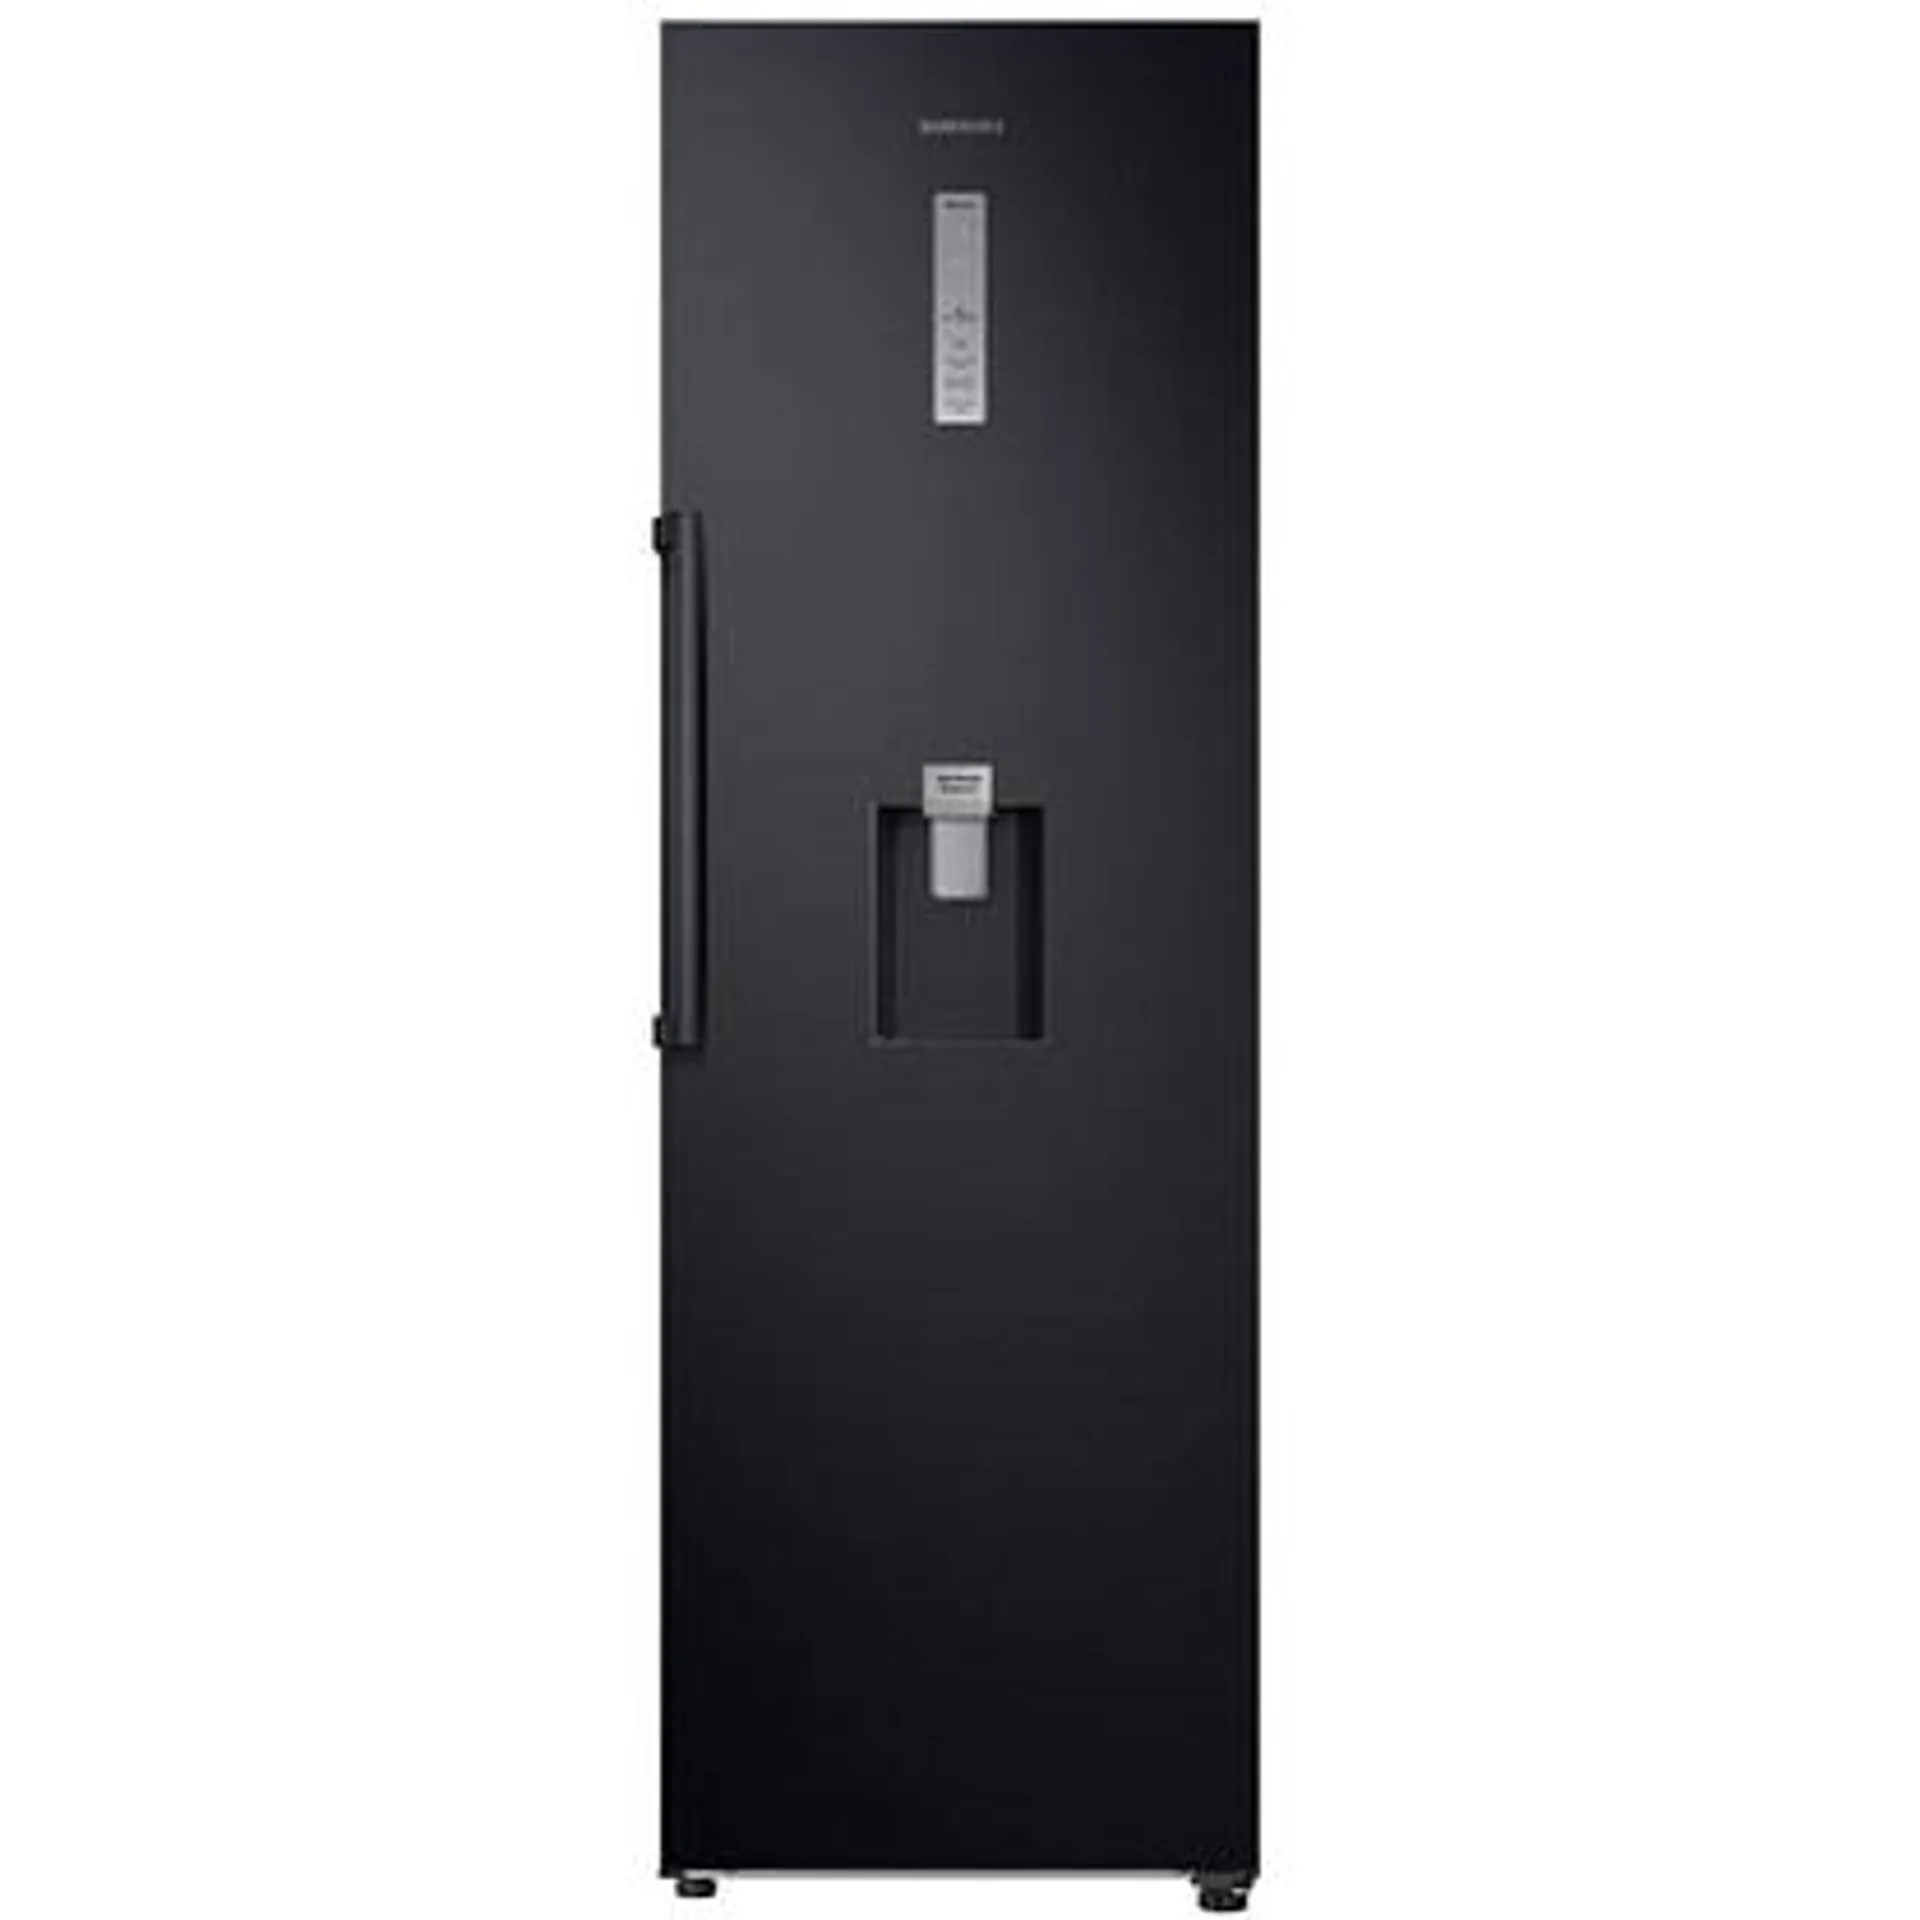 Samsung RR39M7340BN 60cm Freestanding Larder Fridge With Water Dispenser – BLACK